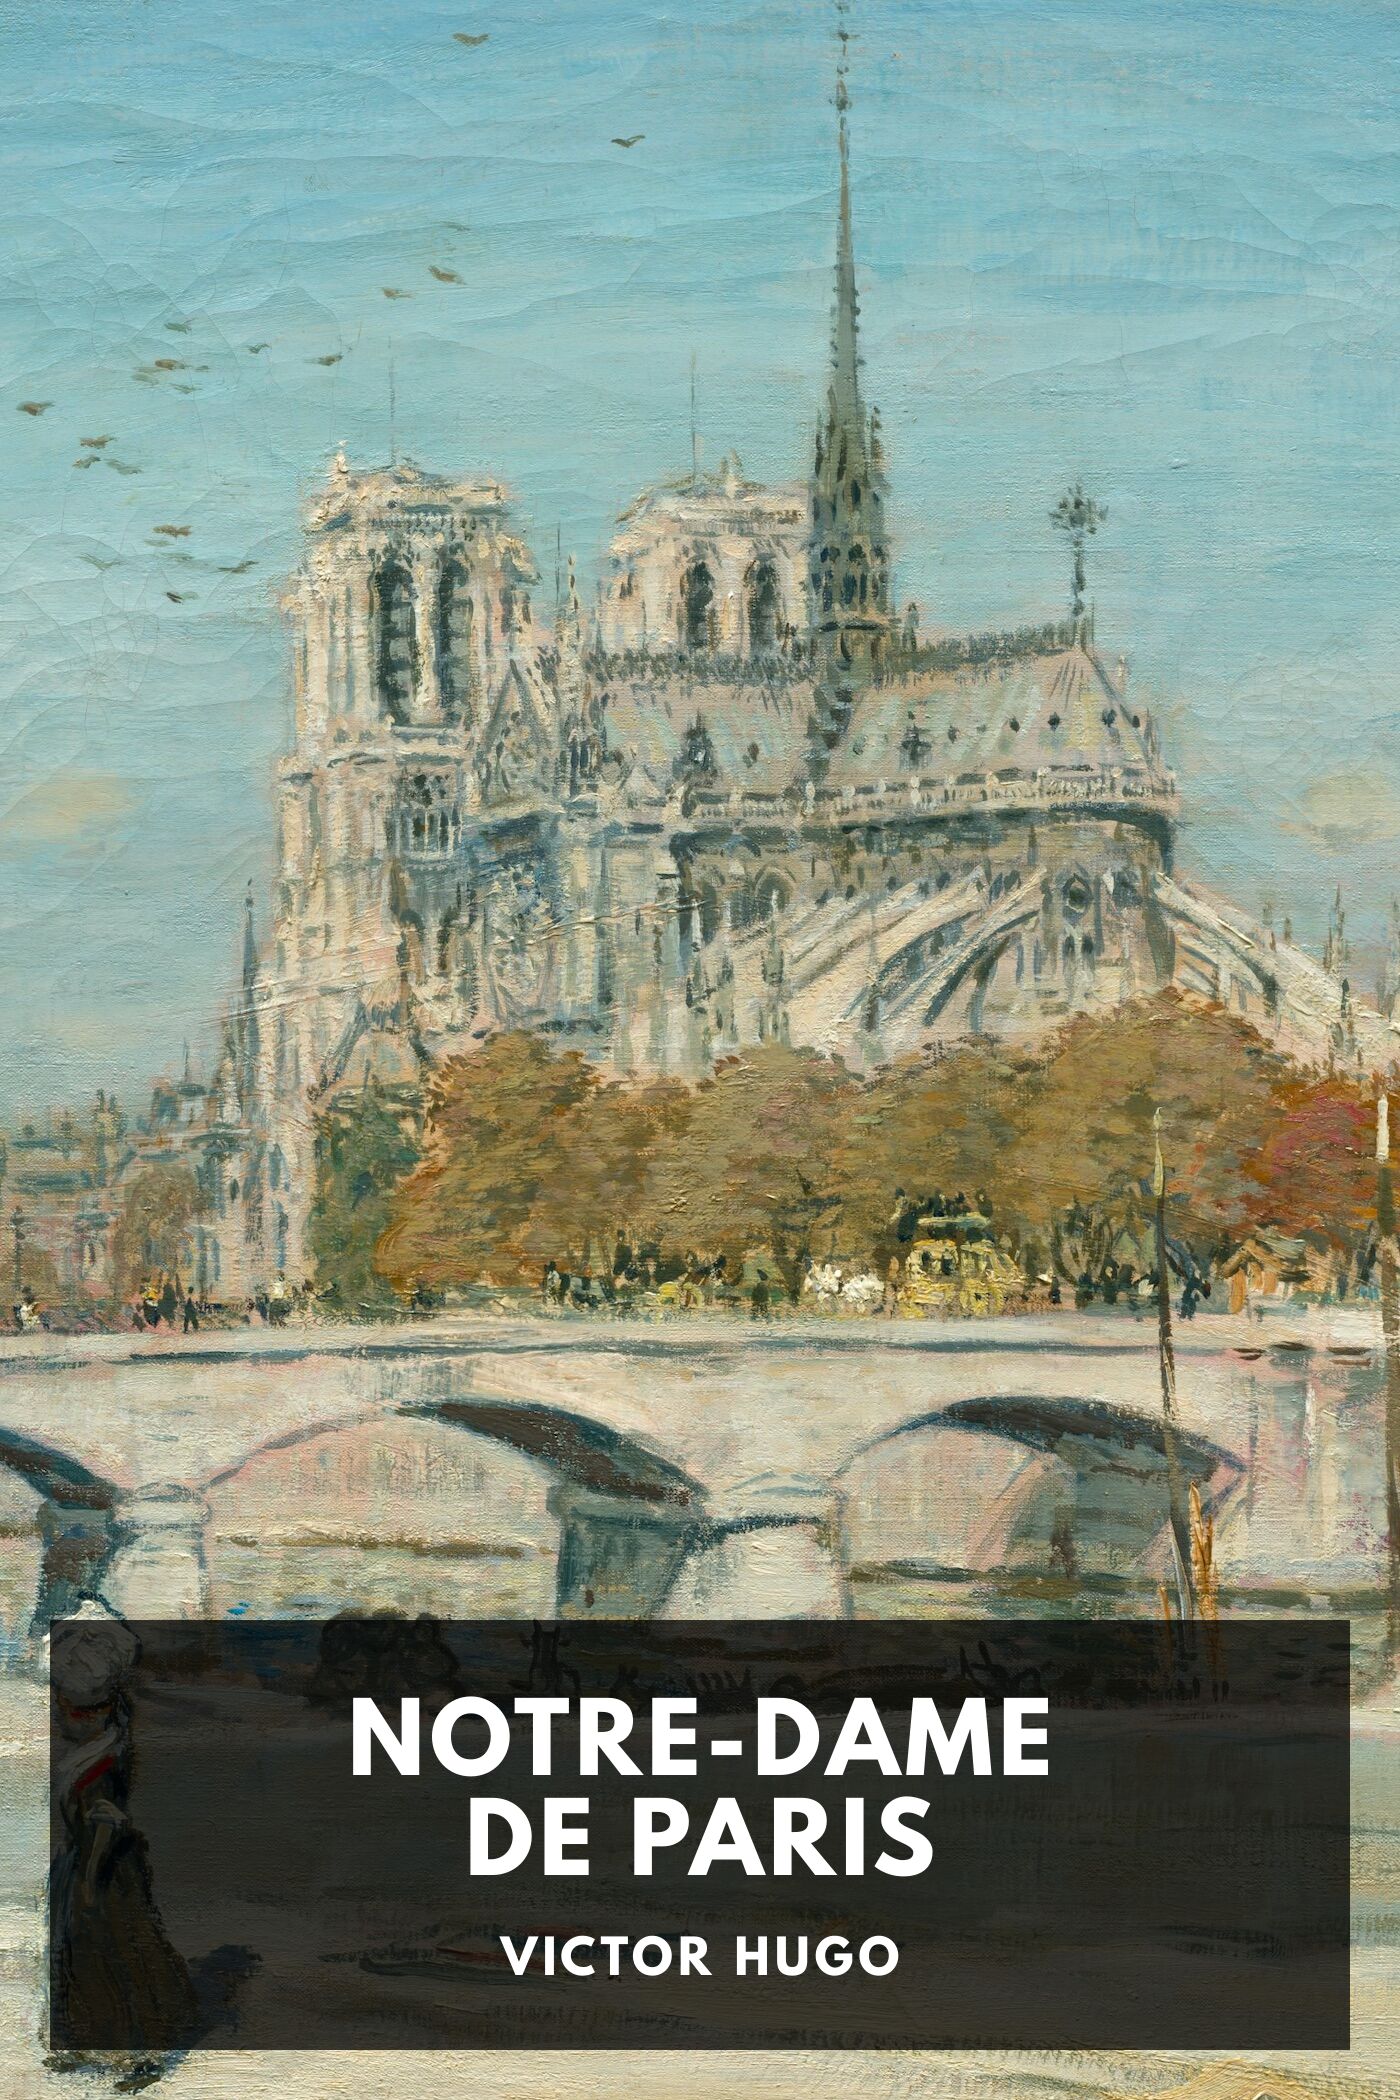 Notre-Dame de Paris, by Victor Hugo. Translated by Isabel F. Hapgood